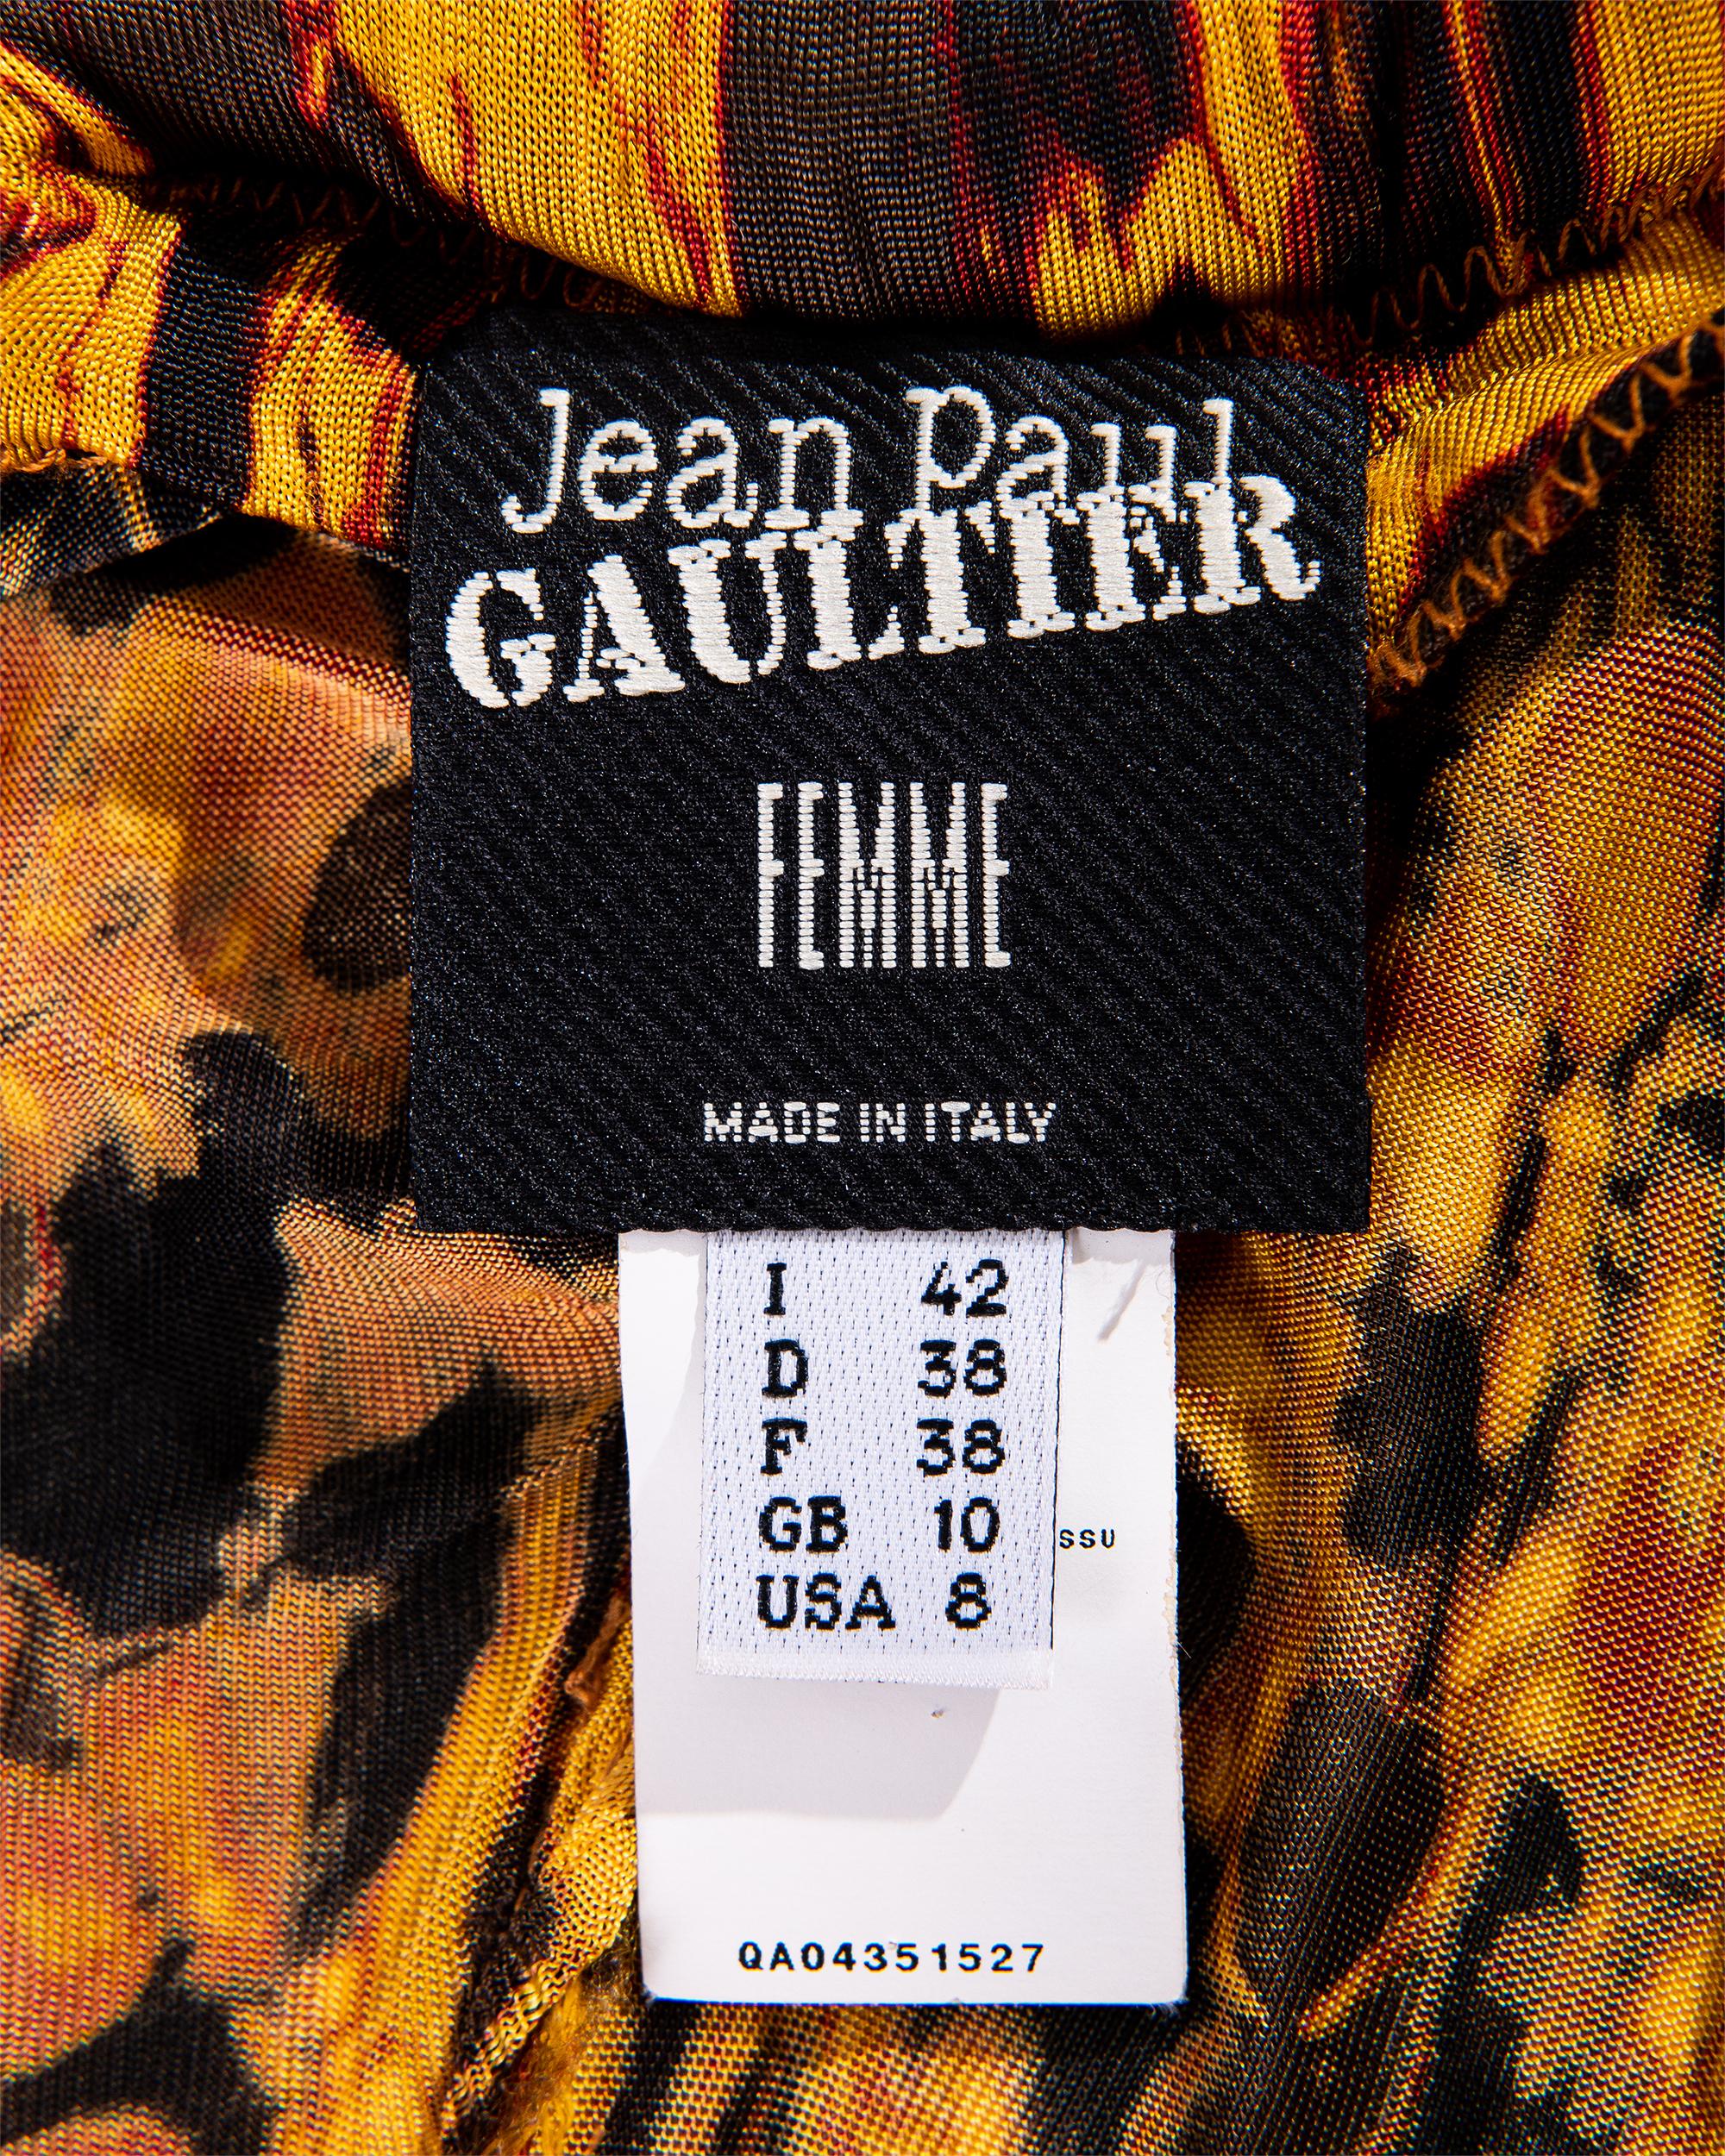 S/S 2005 Jean Paul Gaultier Tortoiseshell Print Macrame Fringe Gown For Sale 9